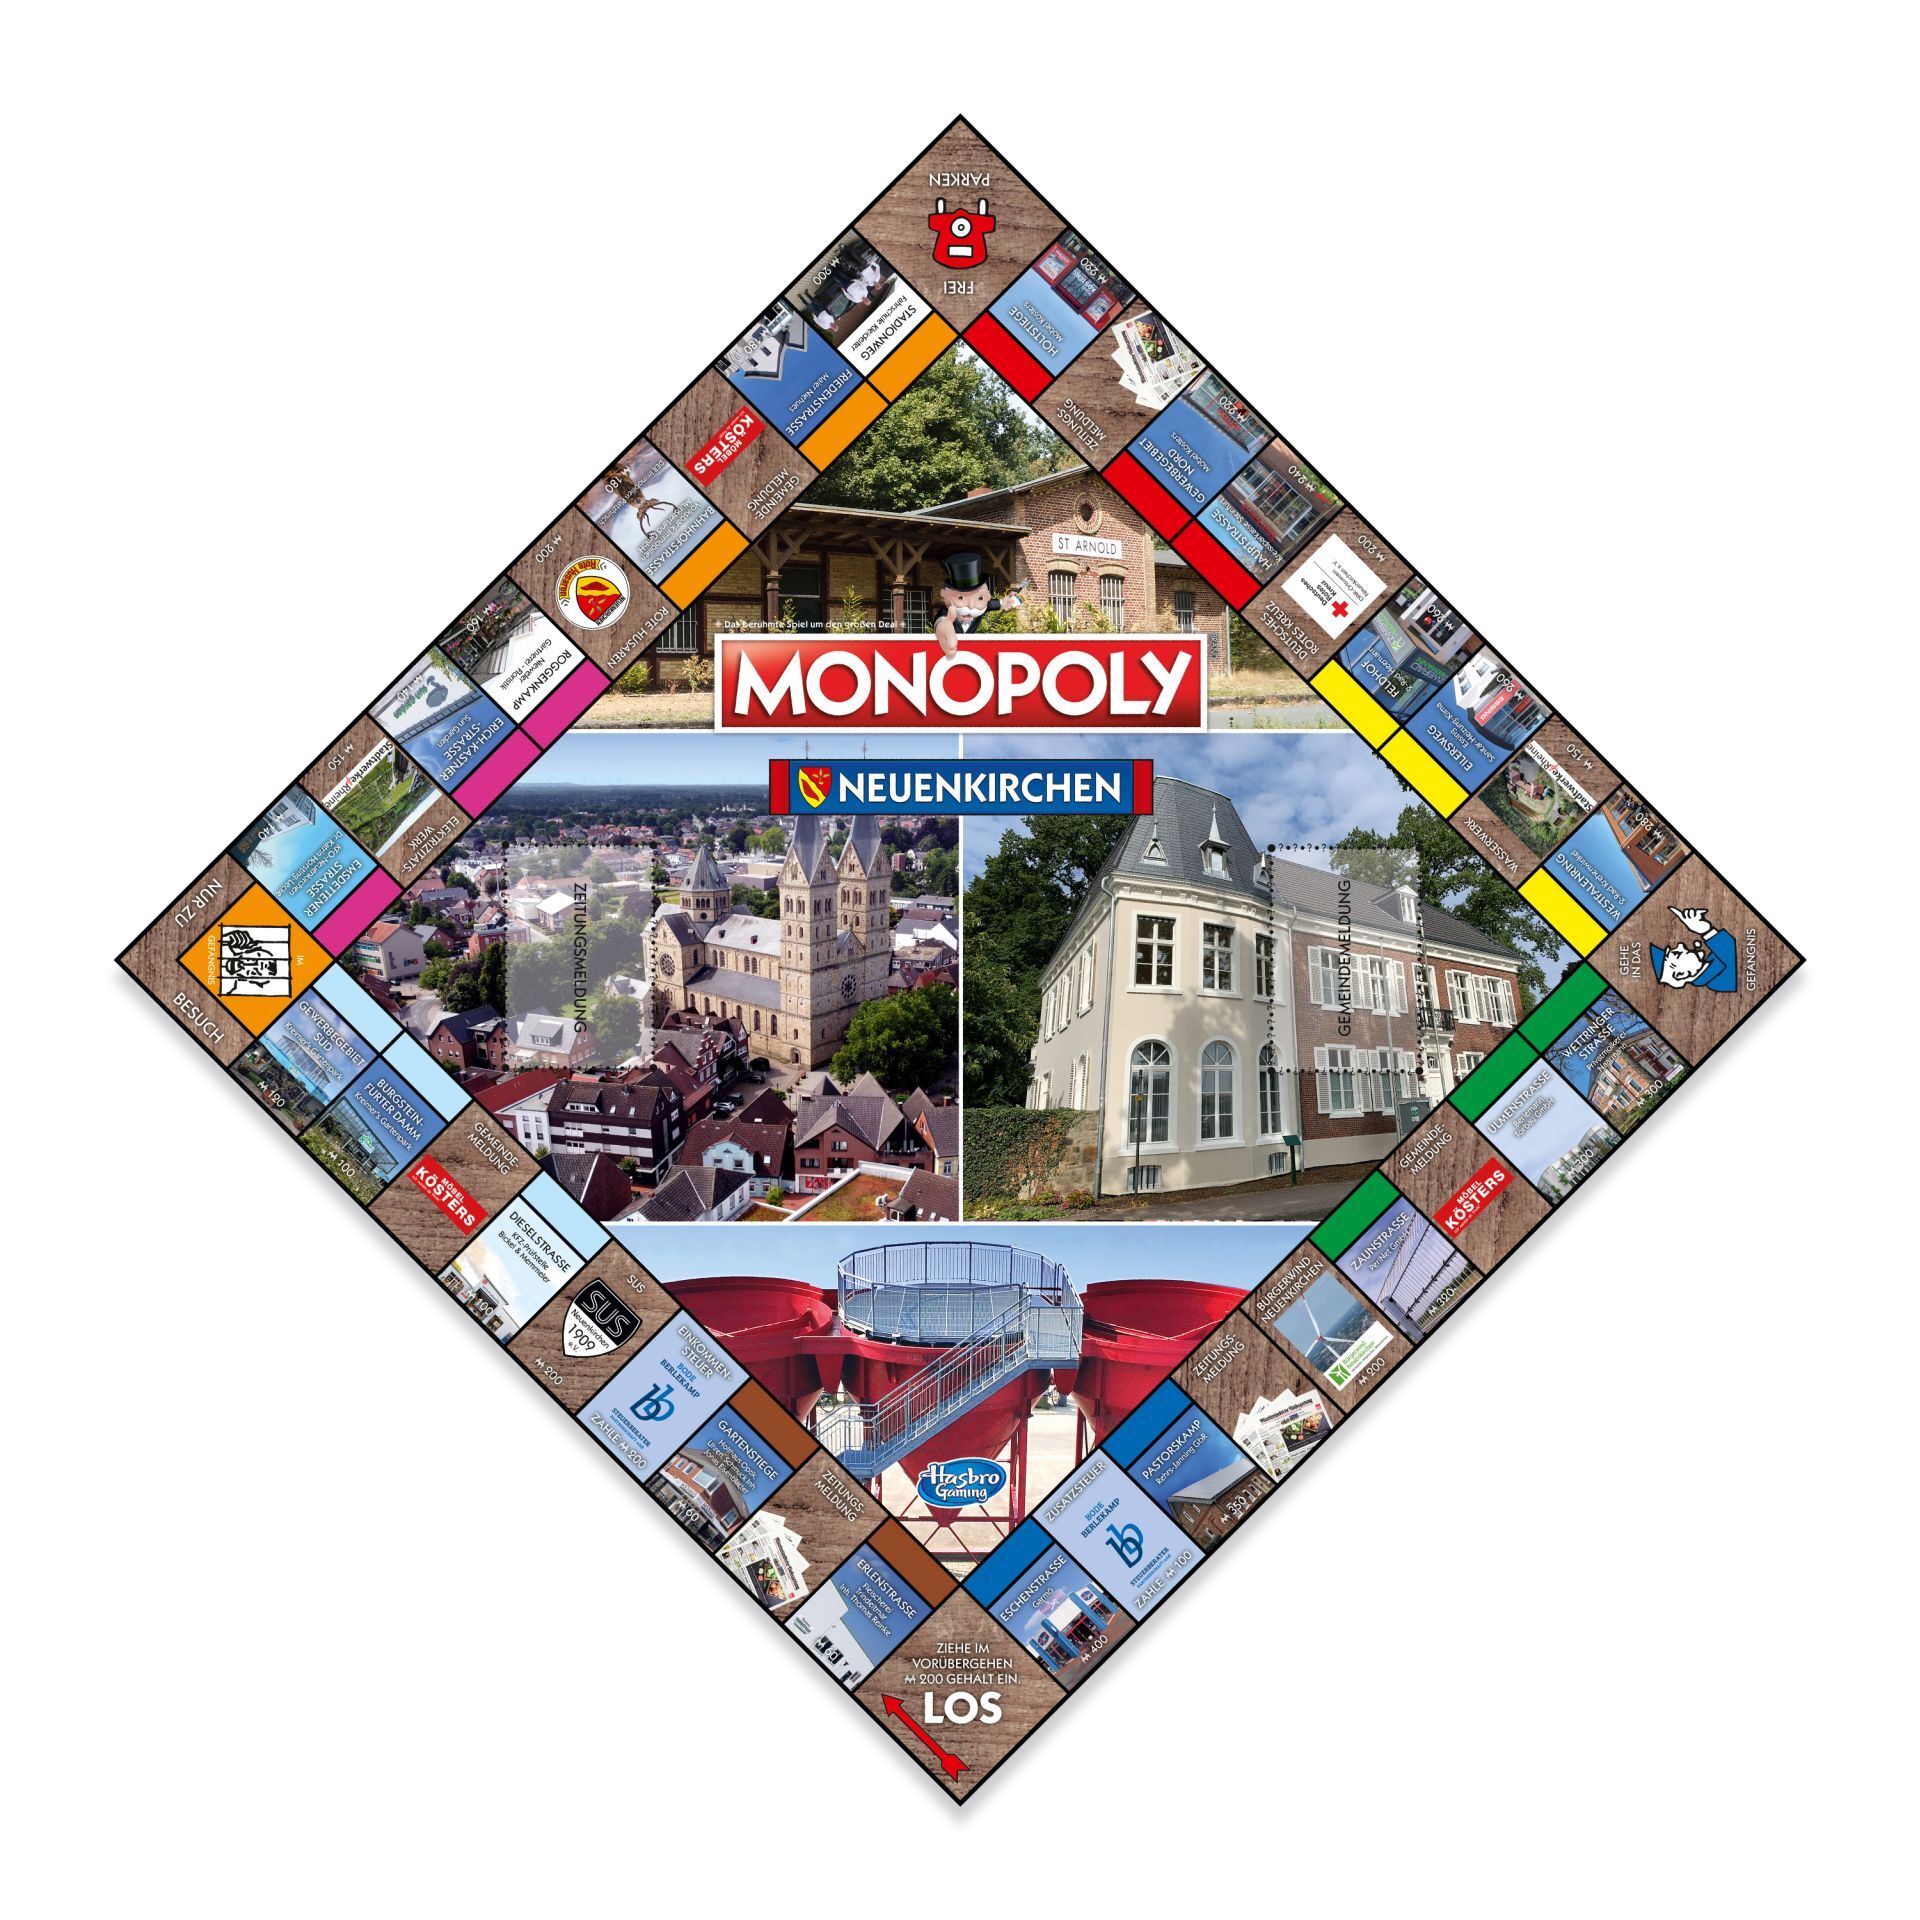 Monopoly - Neuenkirchen